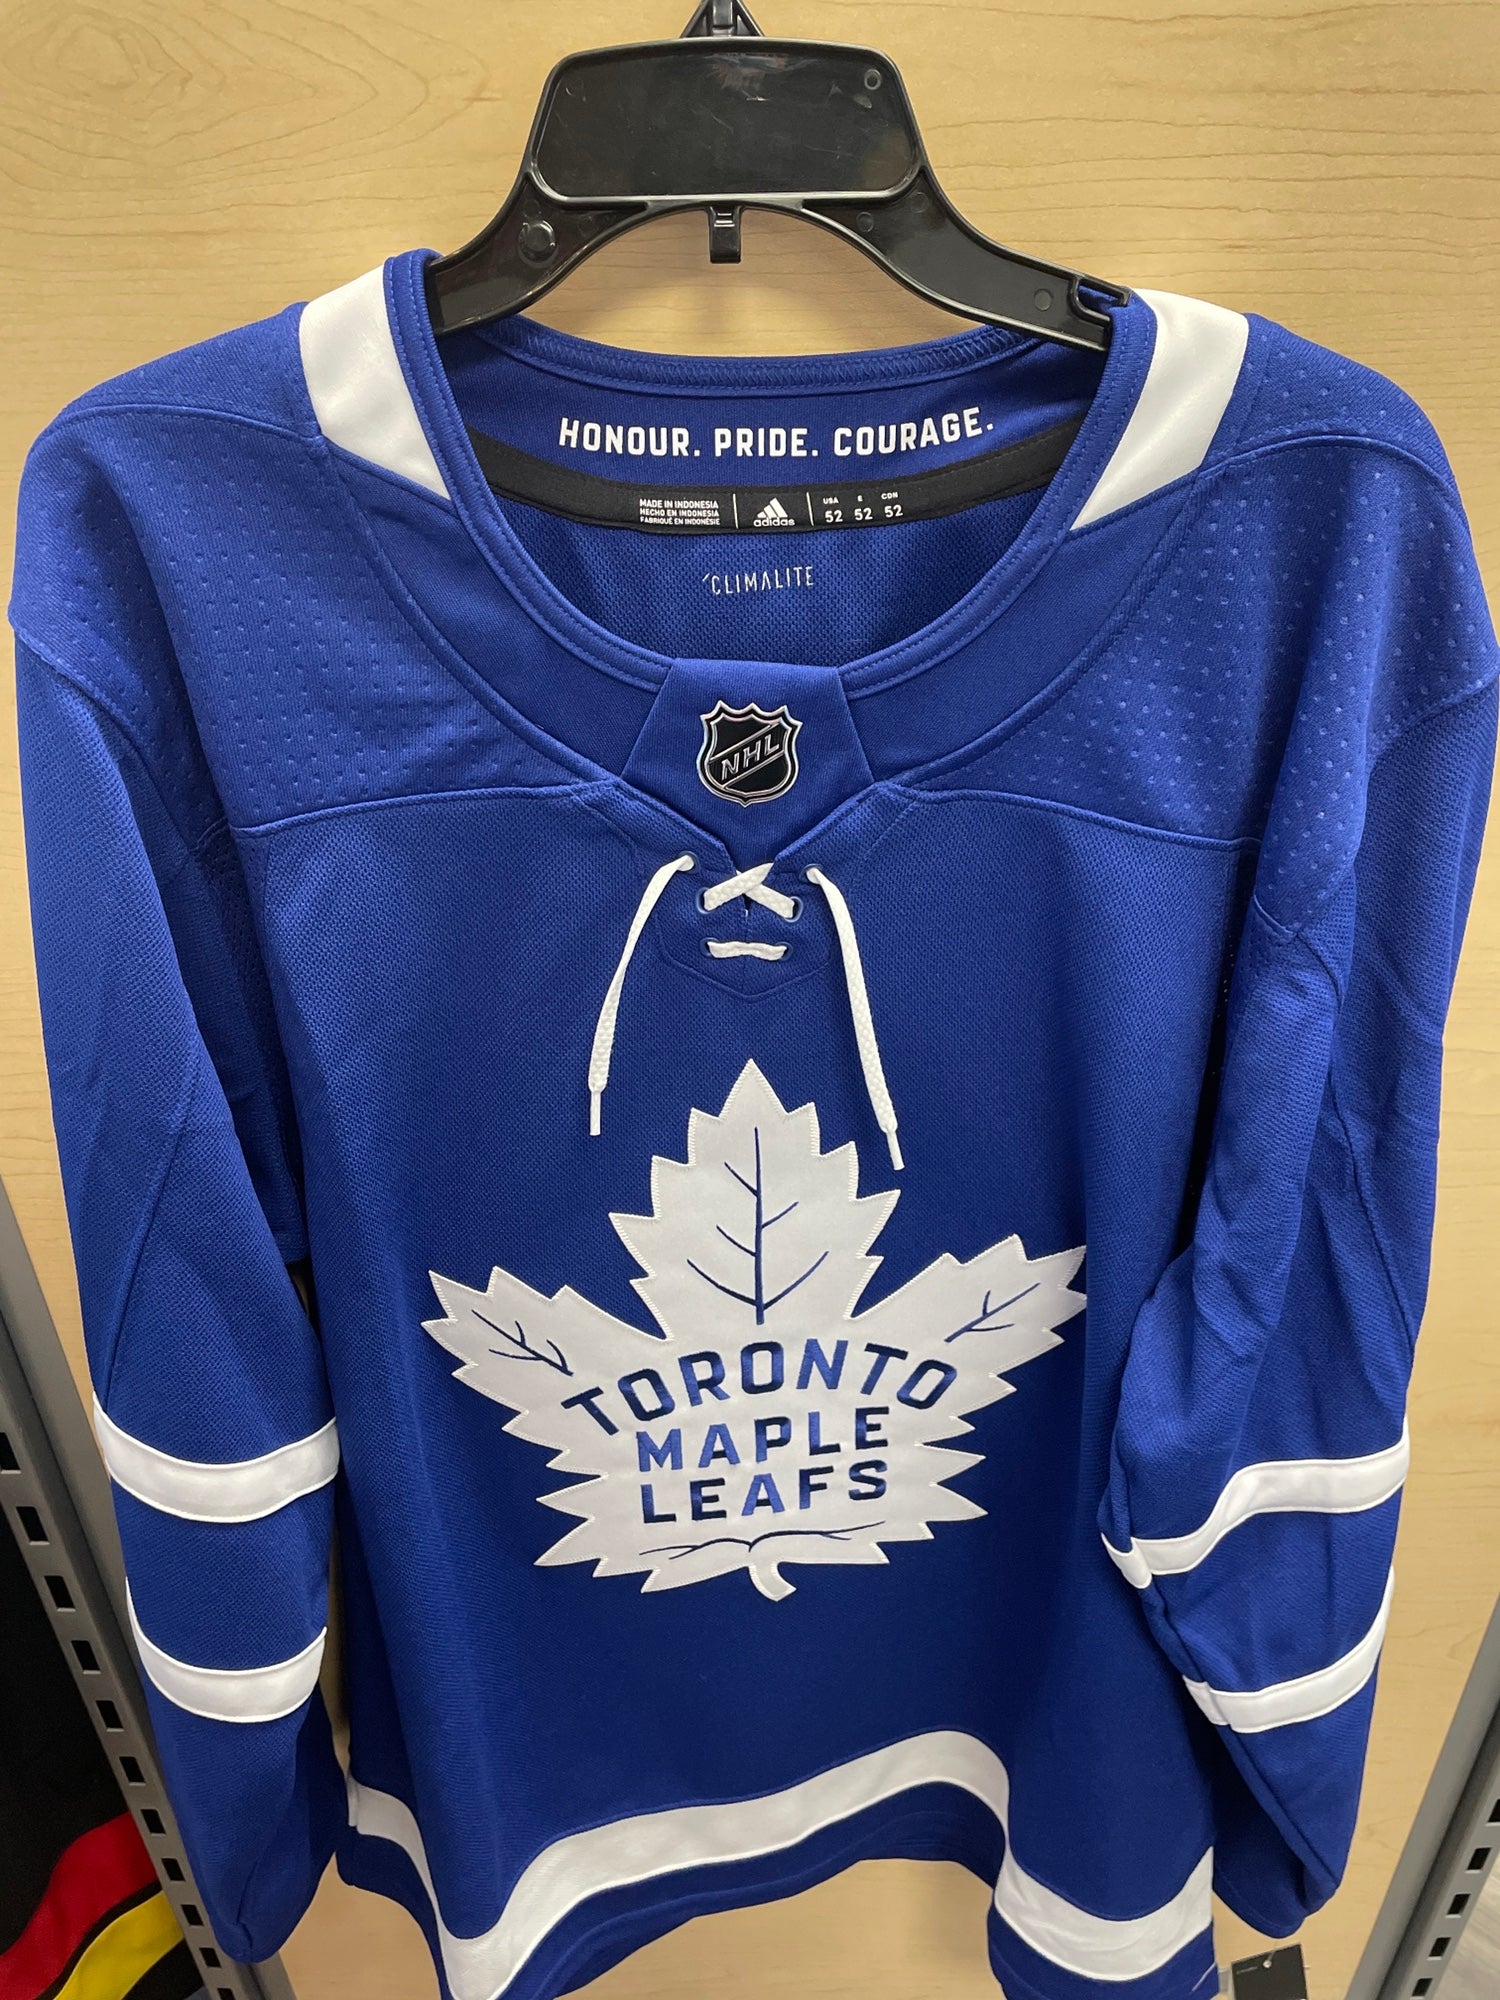 Toronto Maple Leafs Adidas Authentic Home NHL Hockey Jersey - M